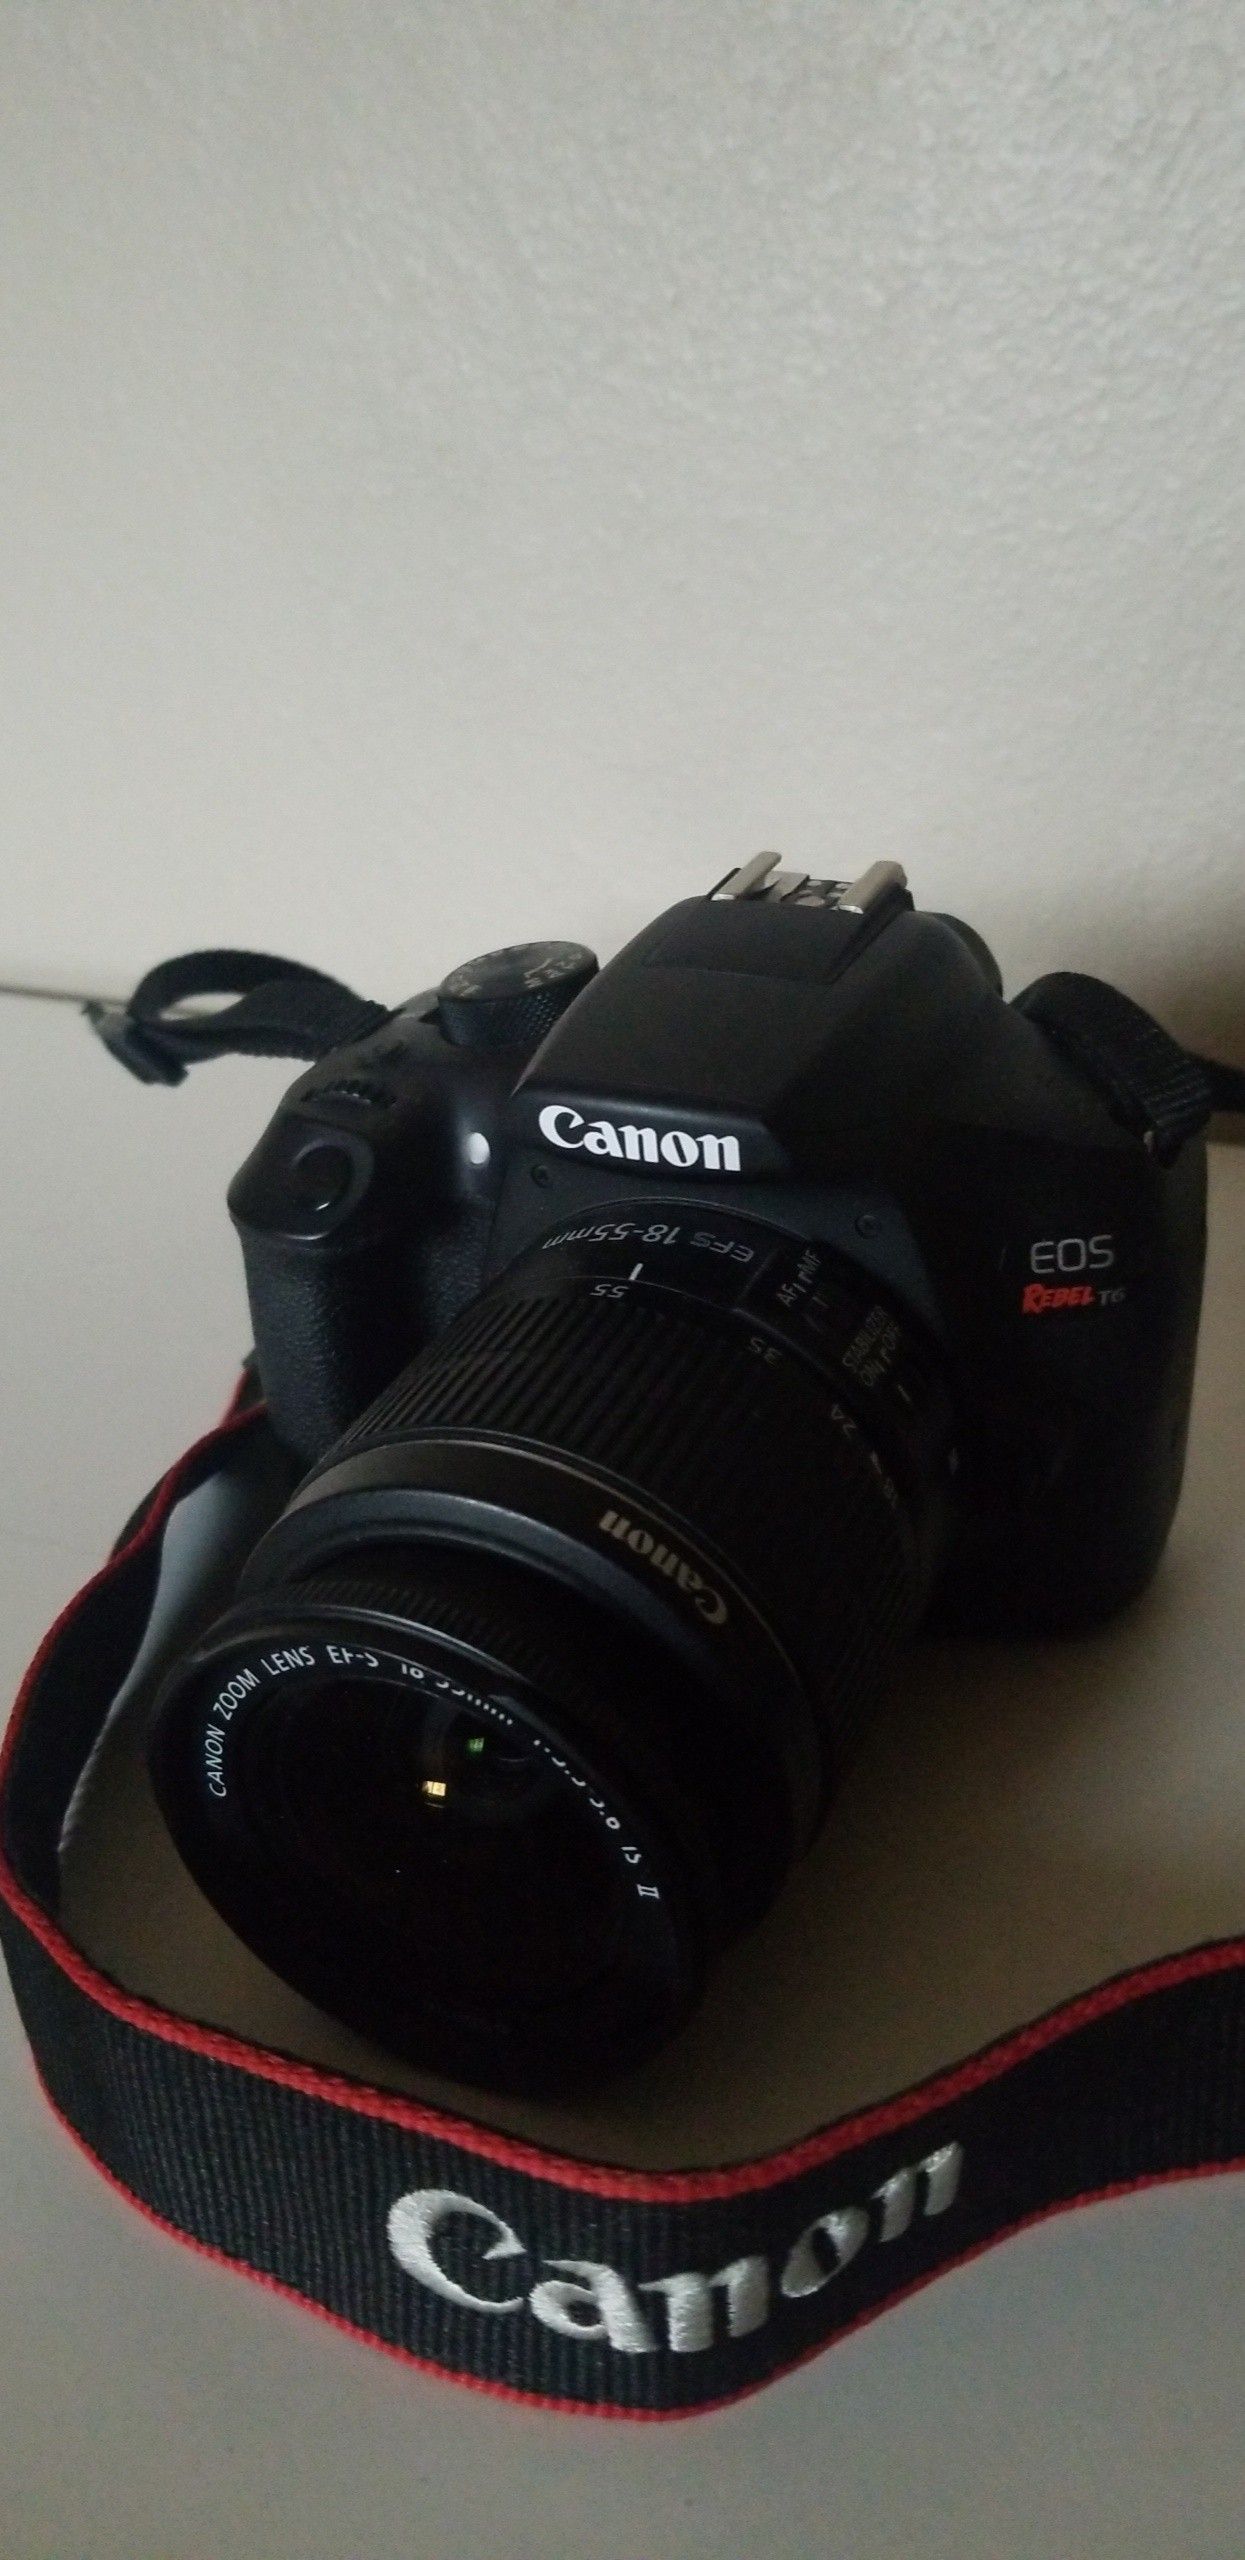 Canon EOS Rebel T6 Digital SLR camera